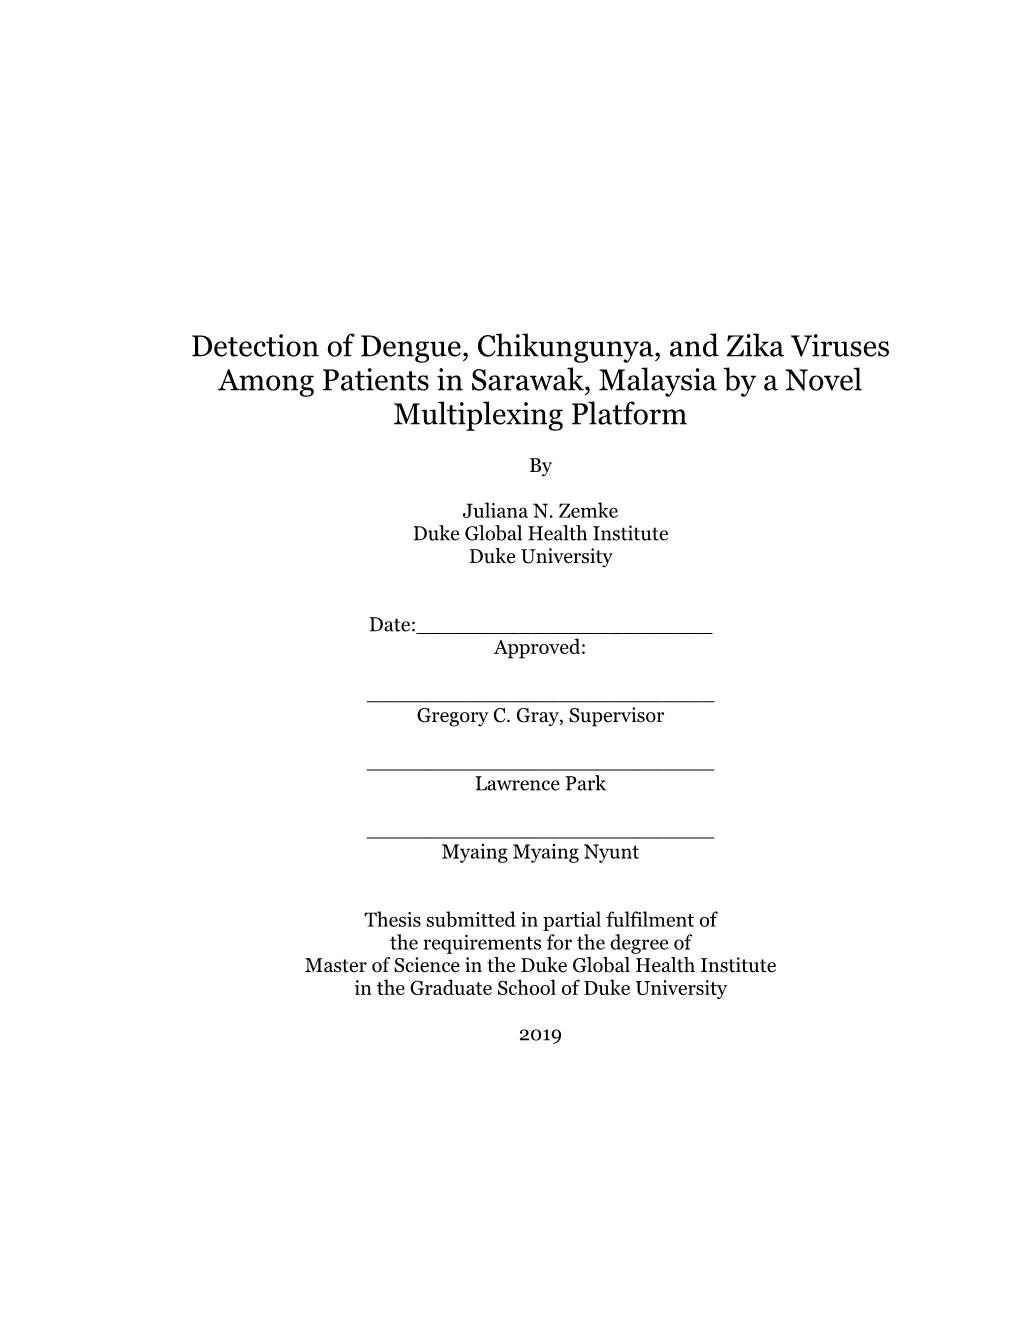 Detection of Dengue, Chikungunya, and Zika Viruses Among Patients in Sarawak, Malaysia by a Novel Multiplexing Platform